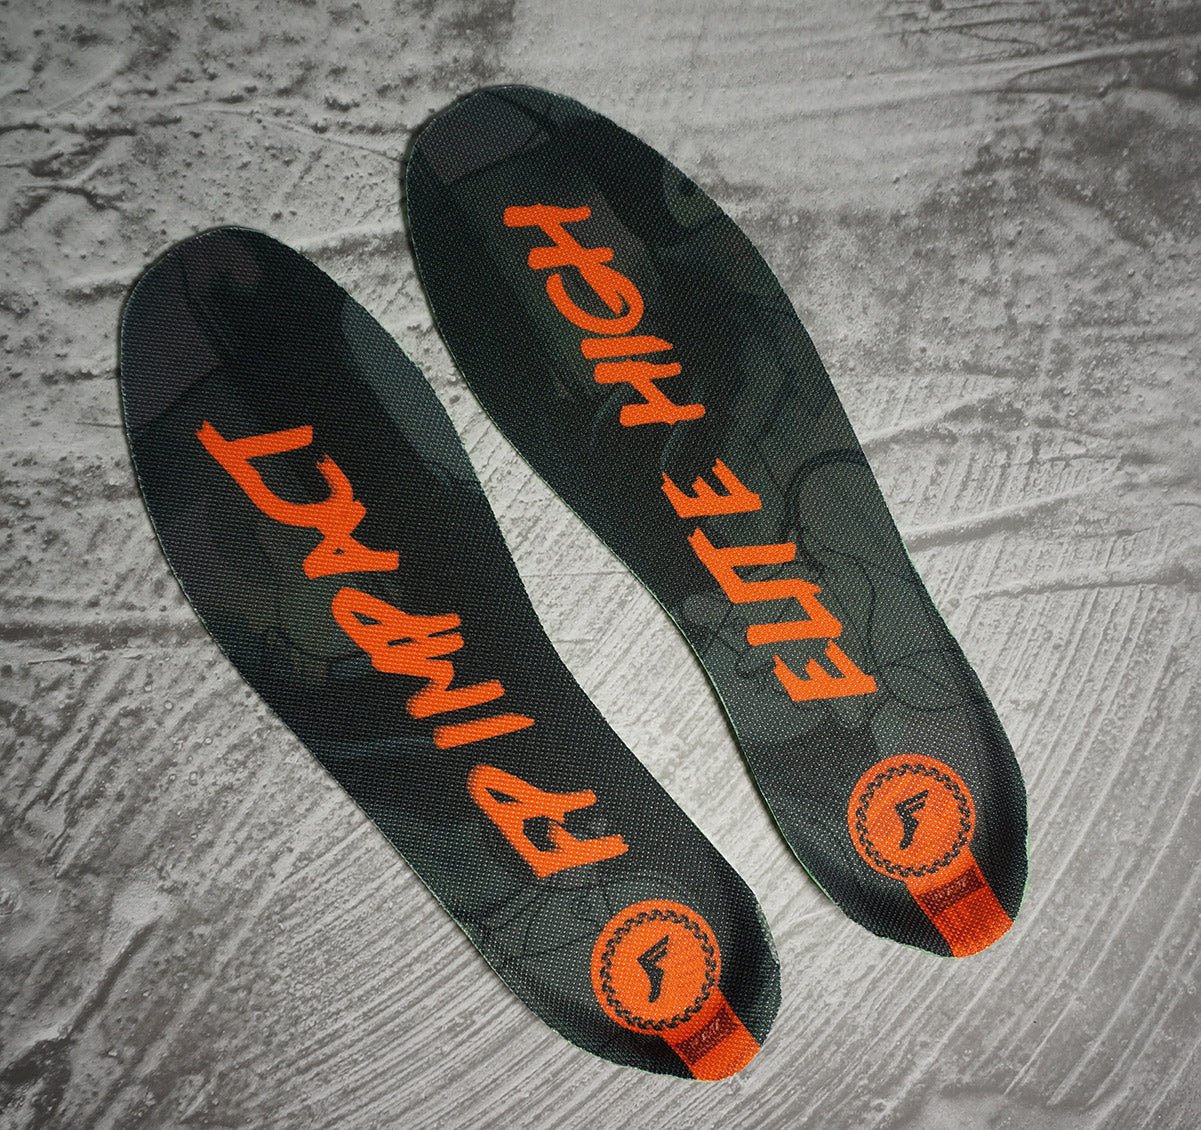 Hi-Profile Kingfoam Elite Footprint Skateboarding Insoles